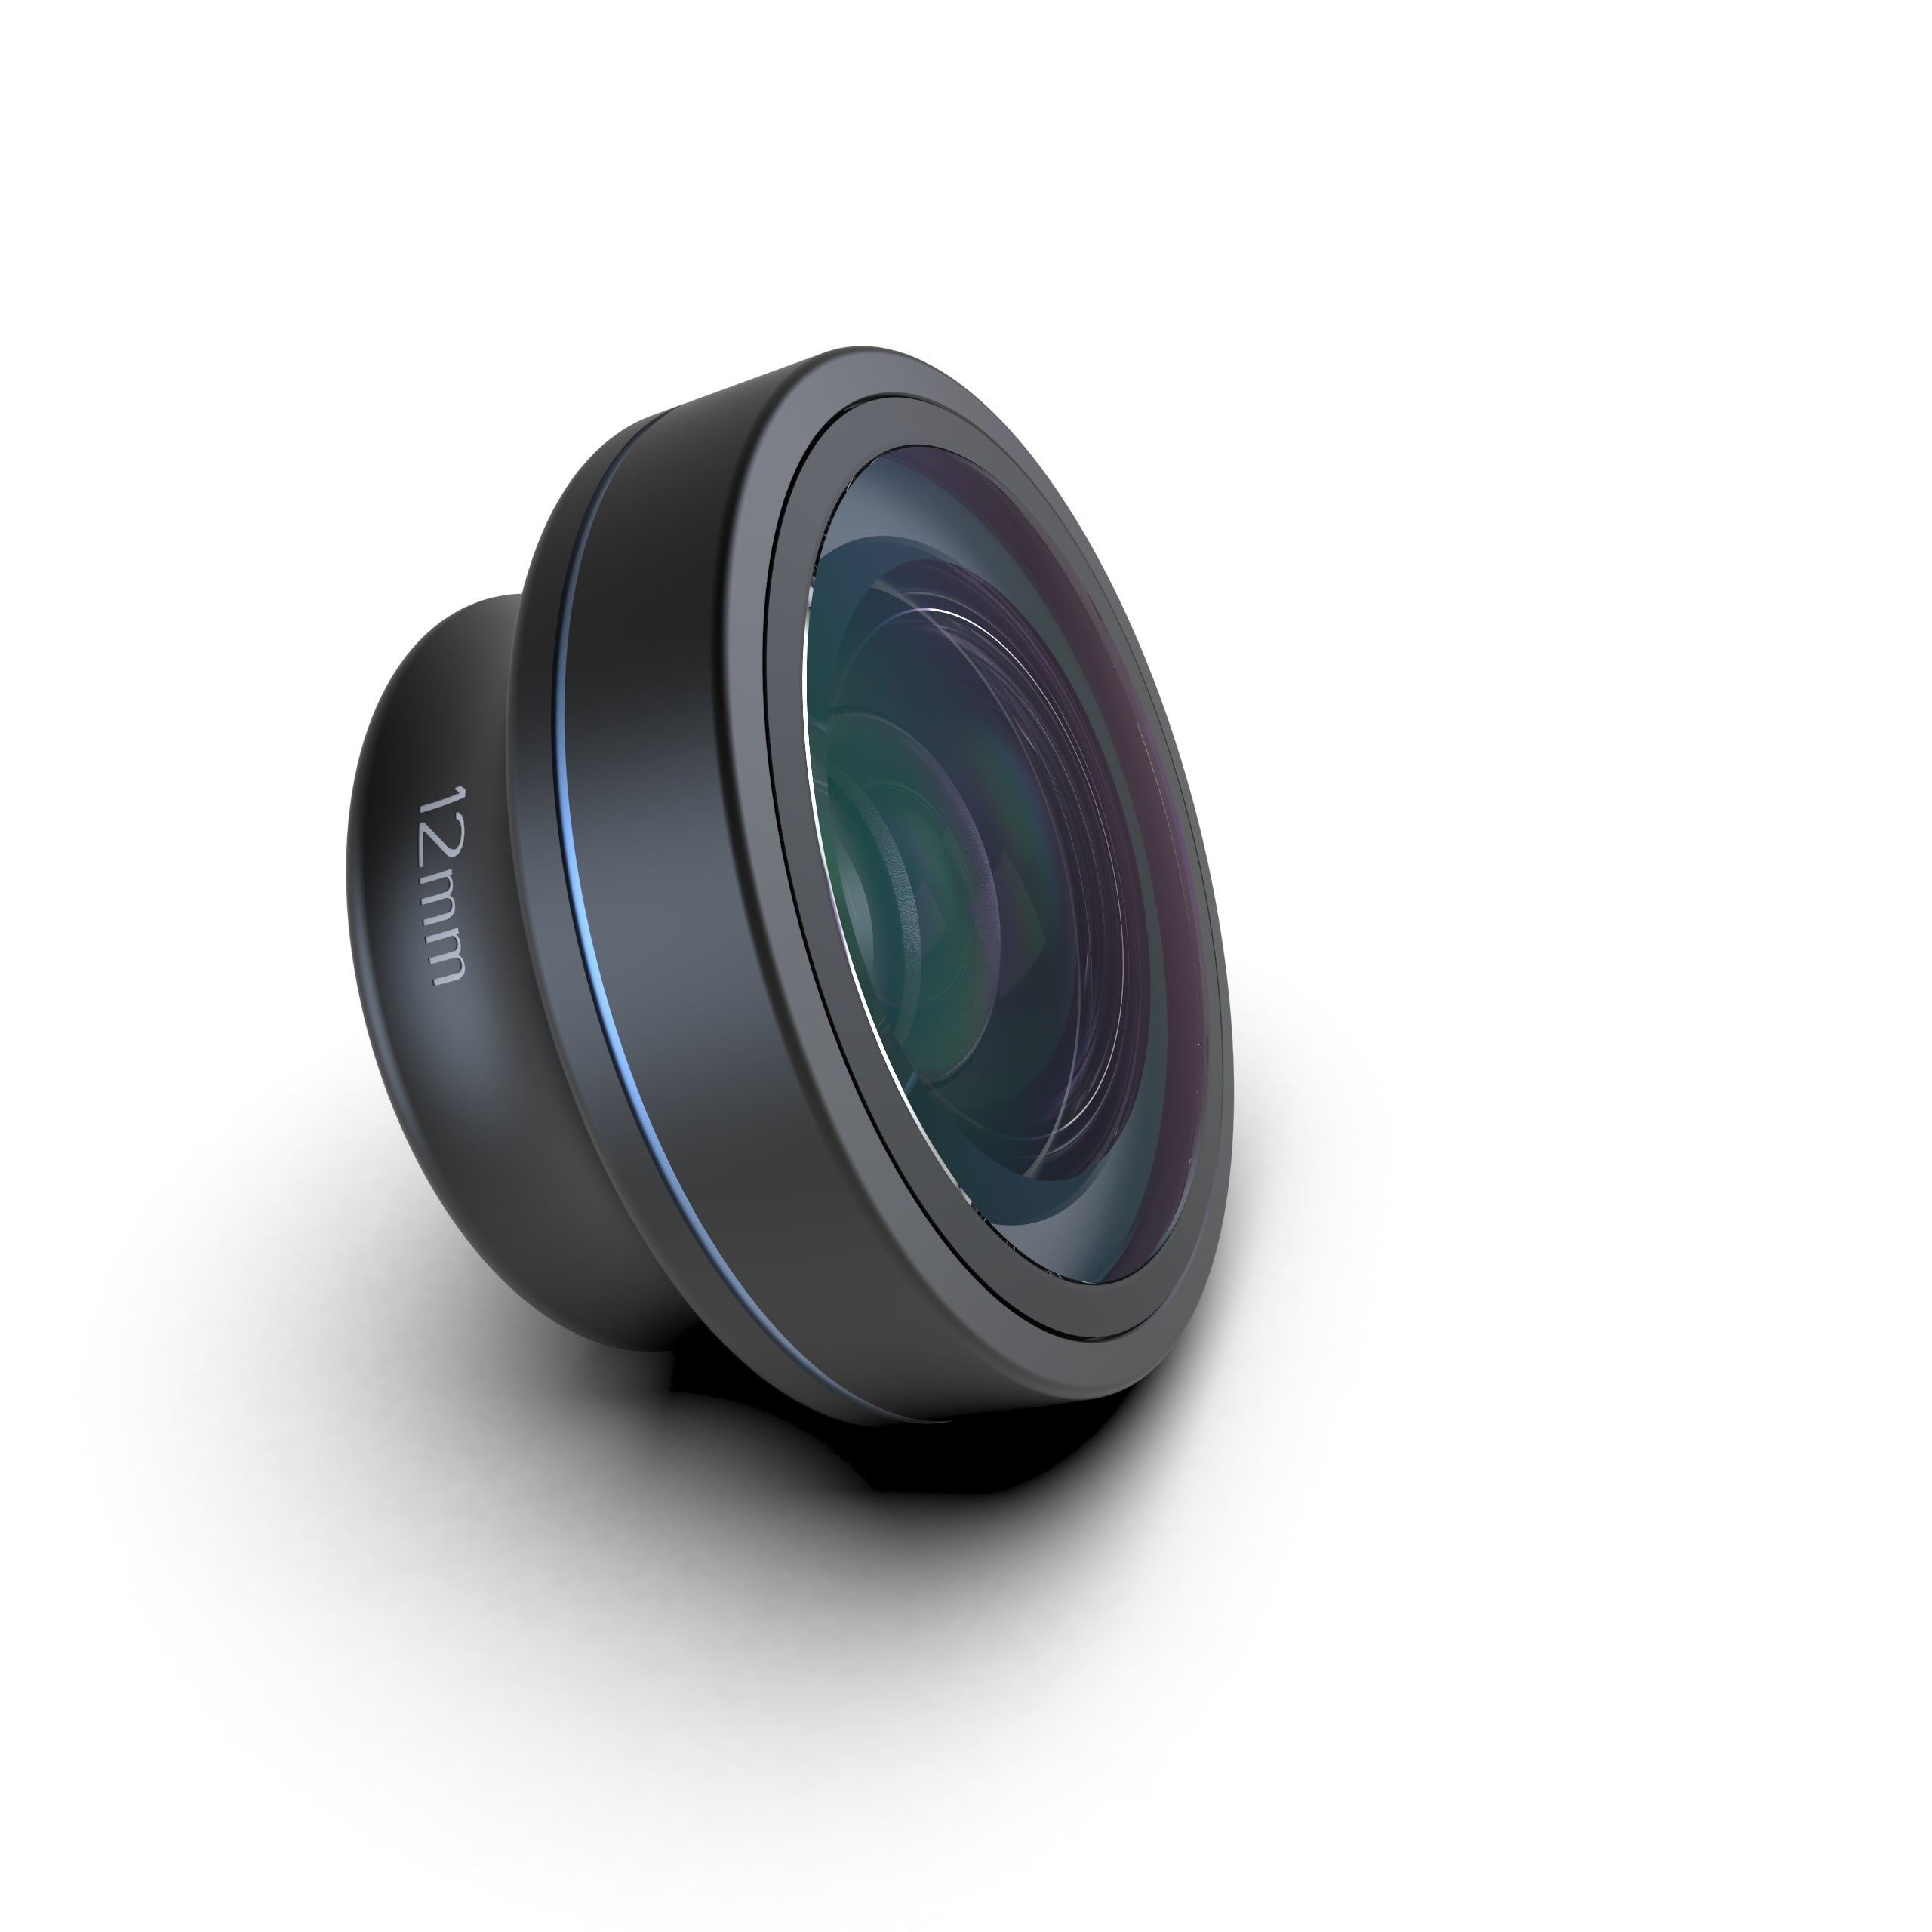 SKYVIK SIGNI One 12mm Fish Eye Lens